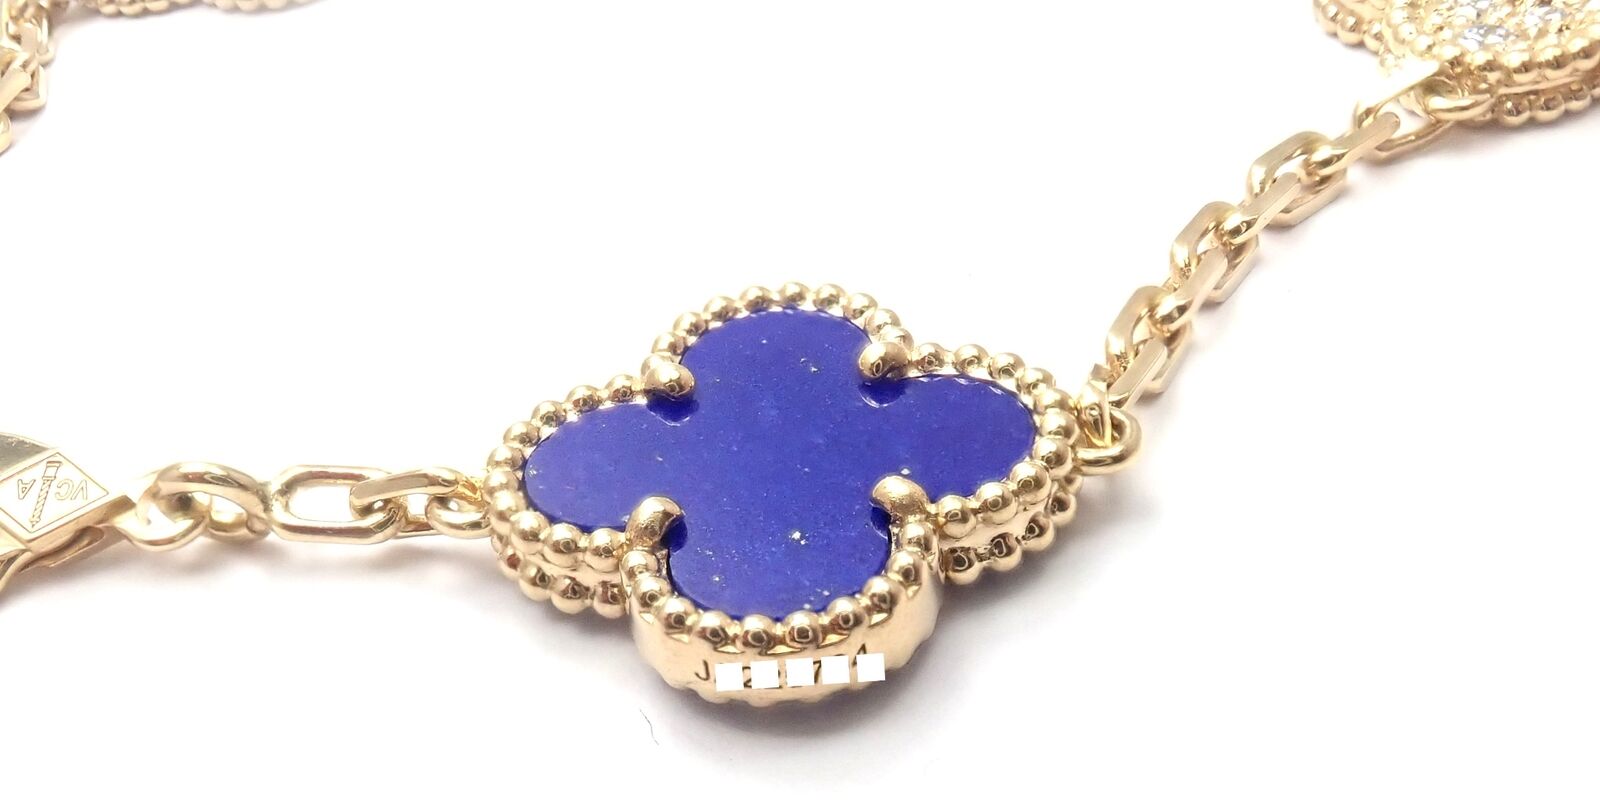 Van Cleef & Arpels Jewelry & Watches:Fine Jewelry:Bracelets & Charms Van Cleef & Arpels Vintage Alhambra 18k Yellow Gold Diamond Lapis Bracelet Cert